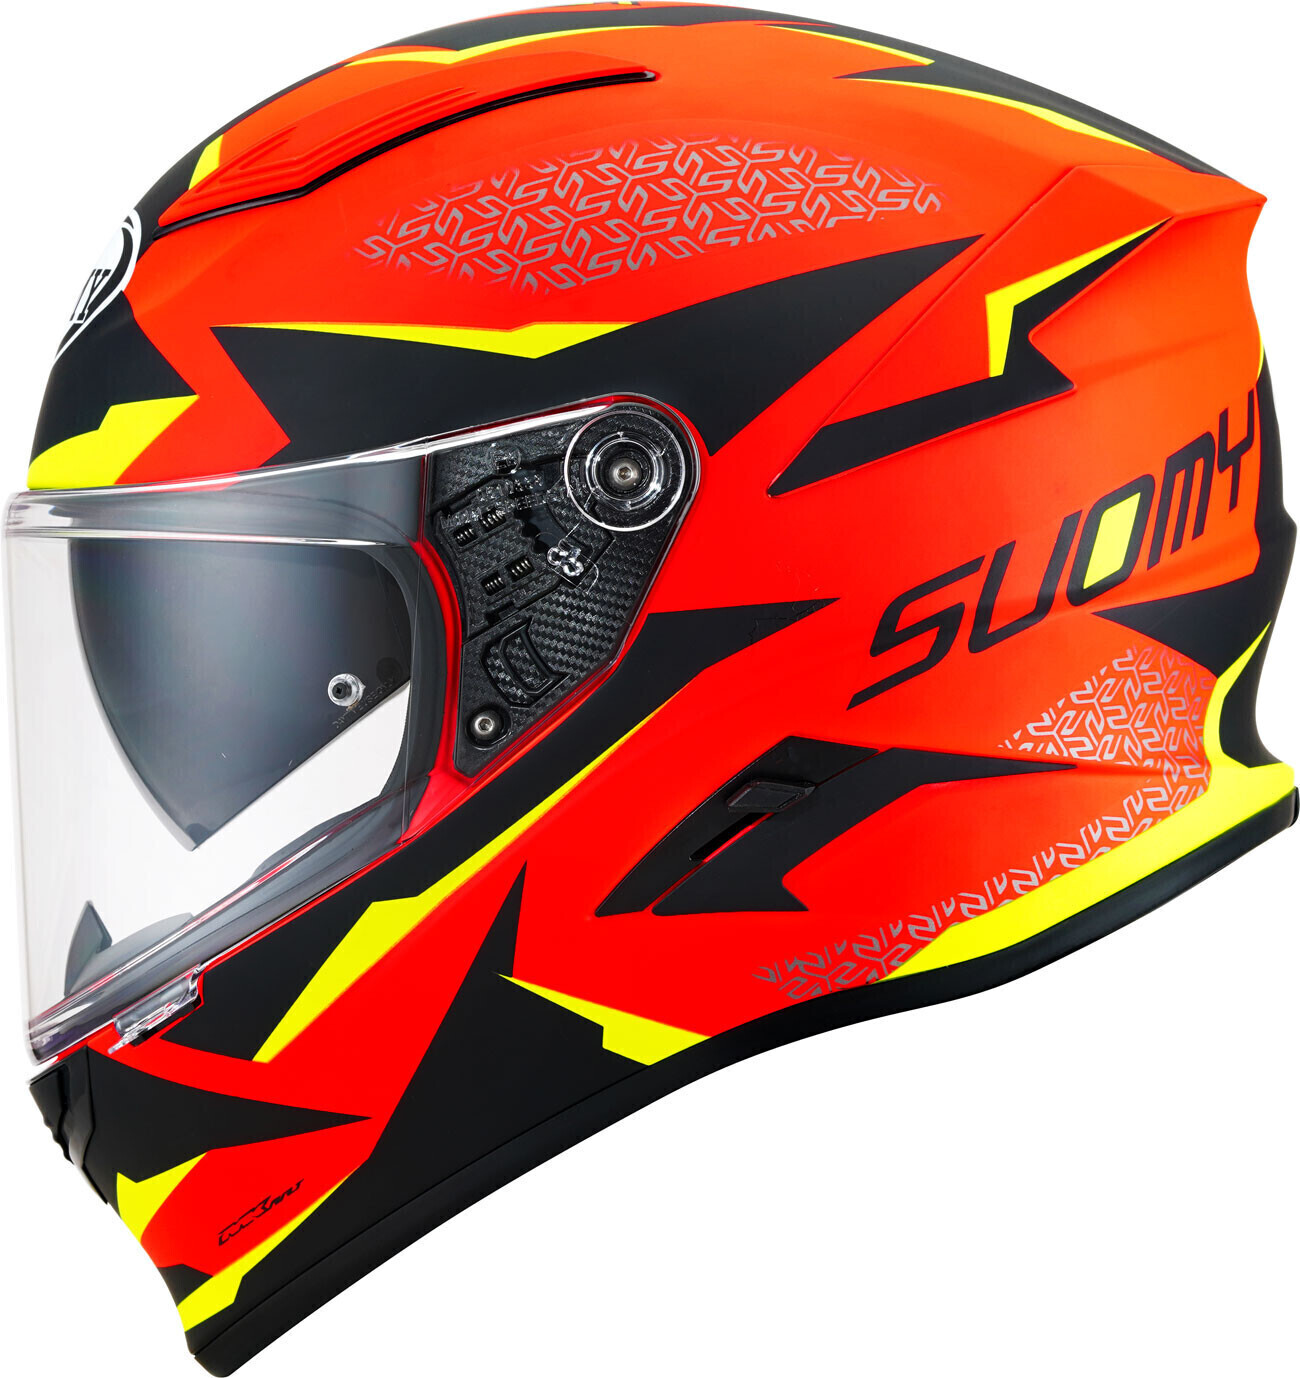 Photos - Motorcycle Helmet SUOMY Speedstar Luminescence red/yellow/black 